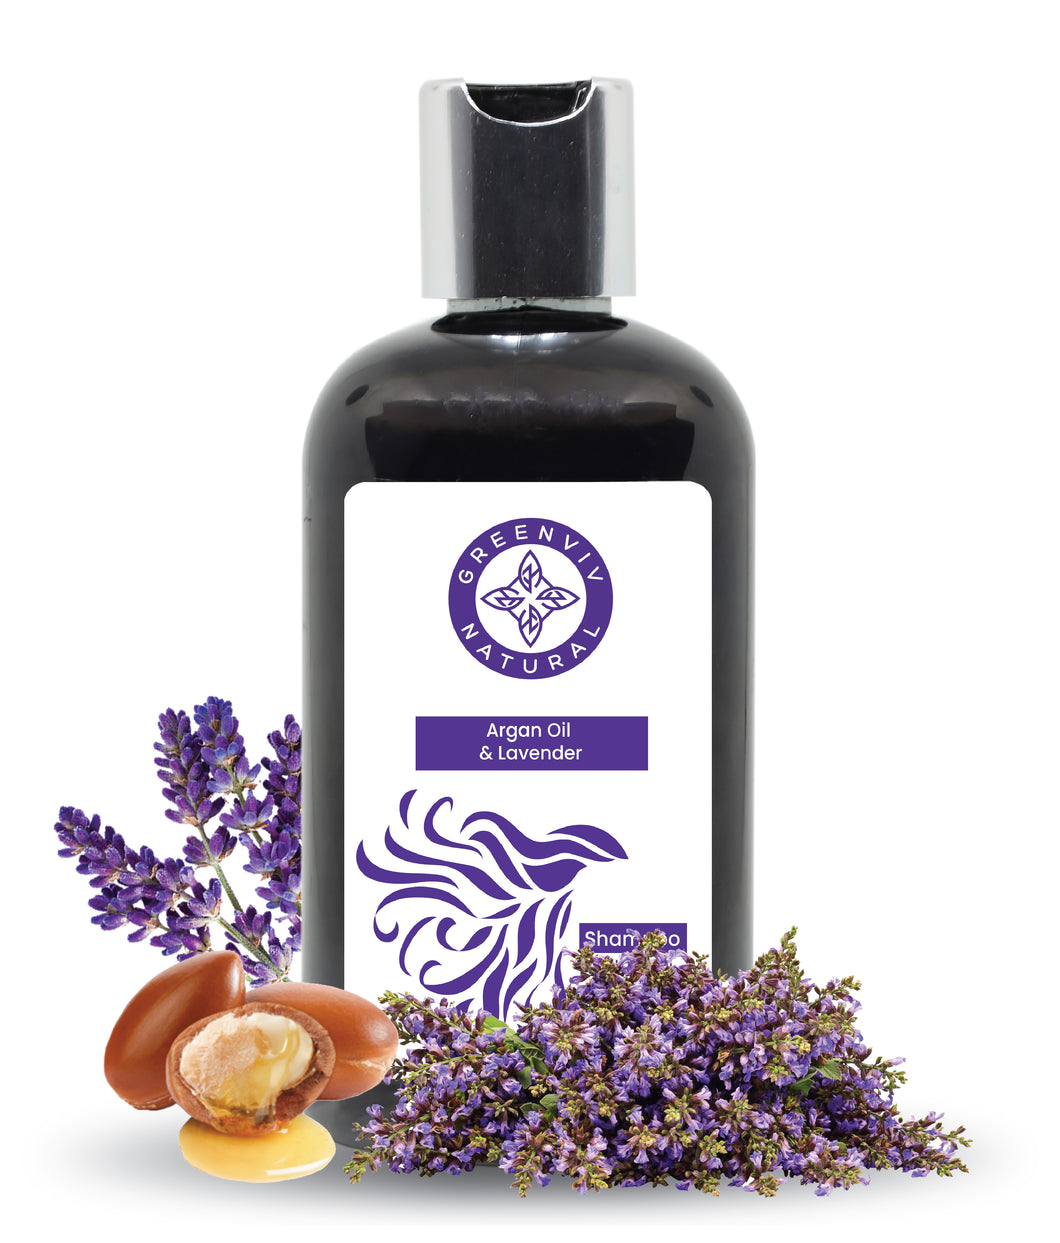 Argan Oil & Lavender